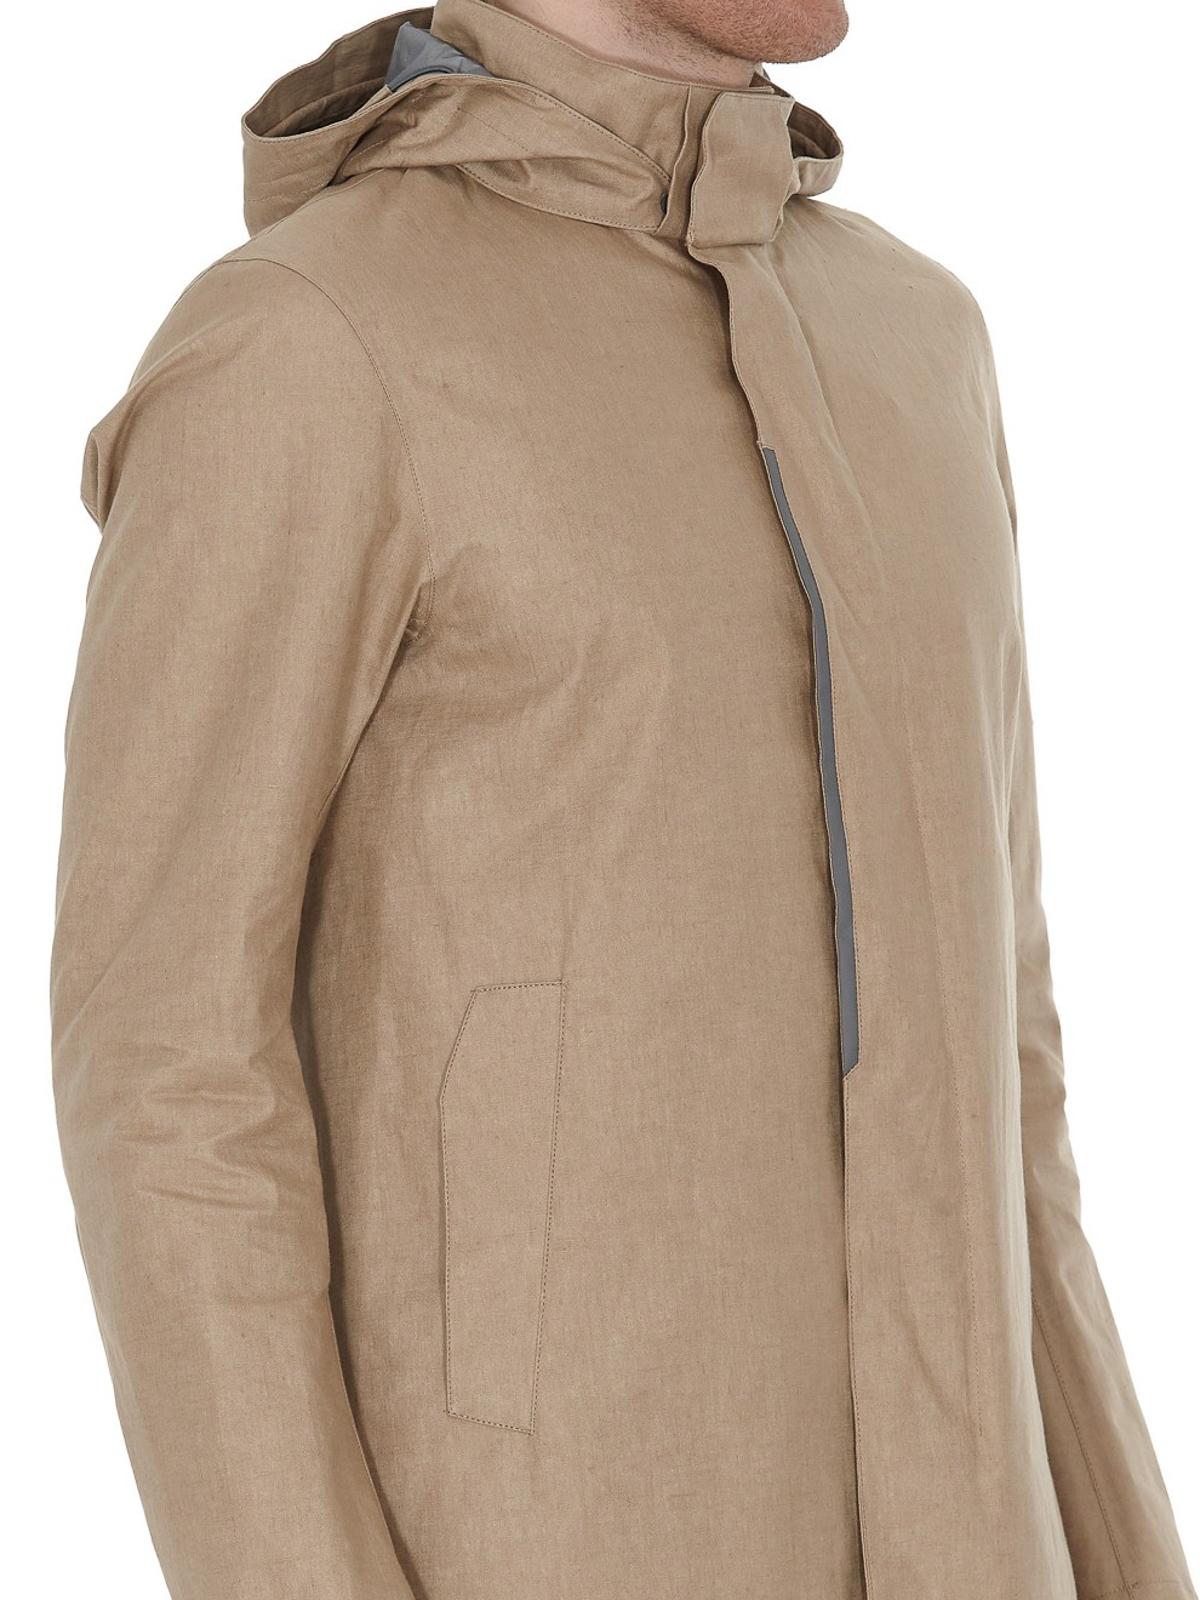 Herno Linen Laminar Raincoat in Beige (Natural) for Men - Lyst